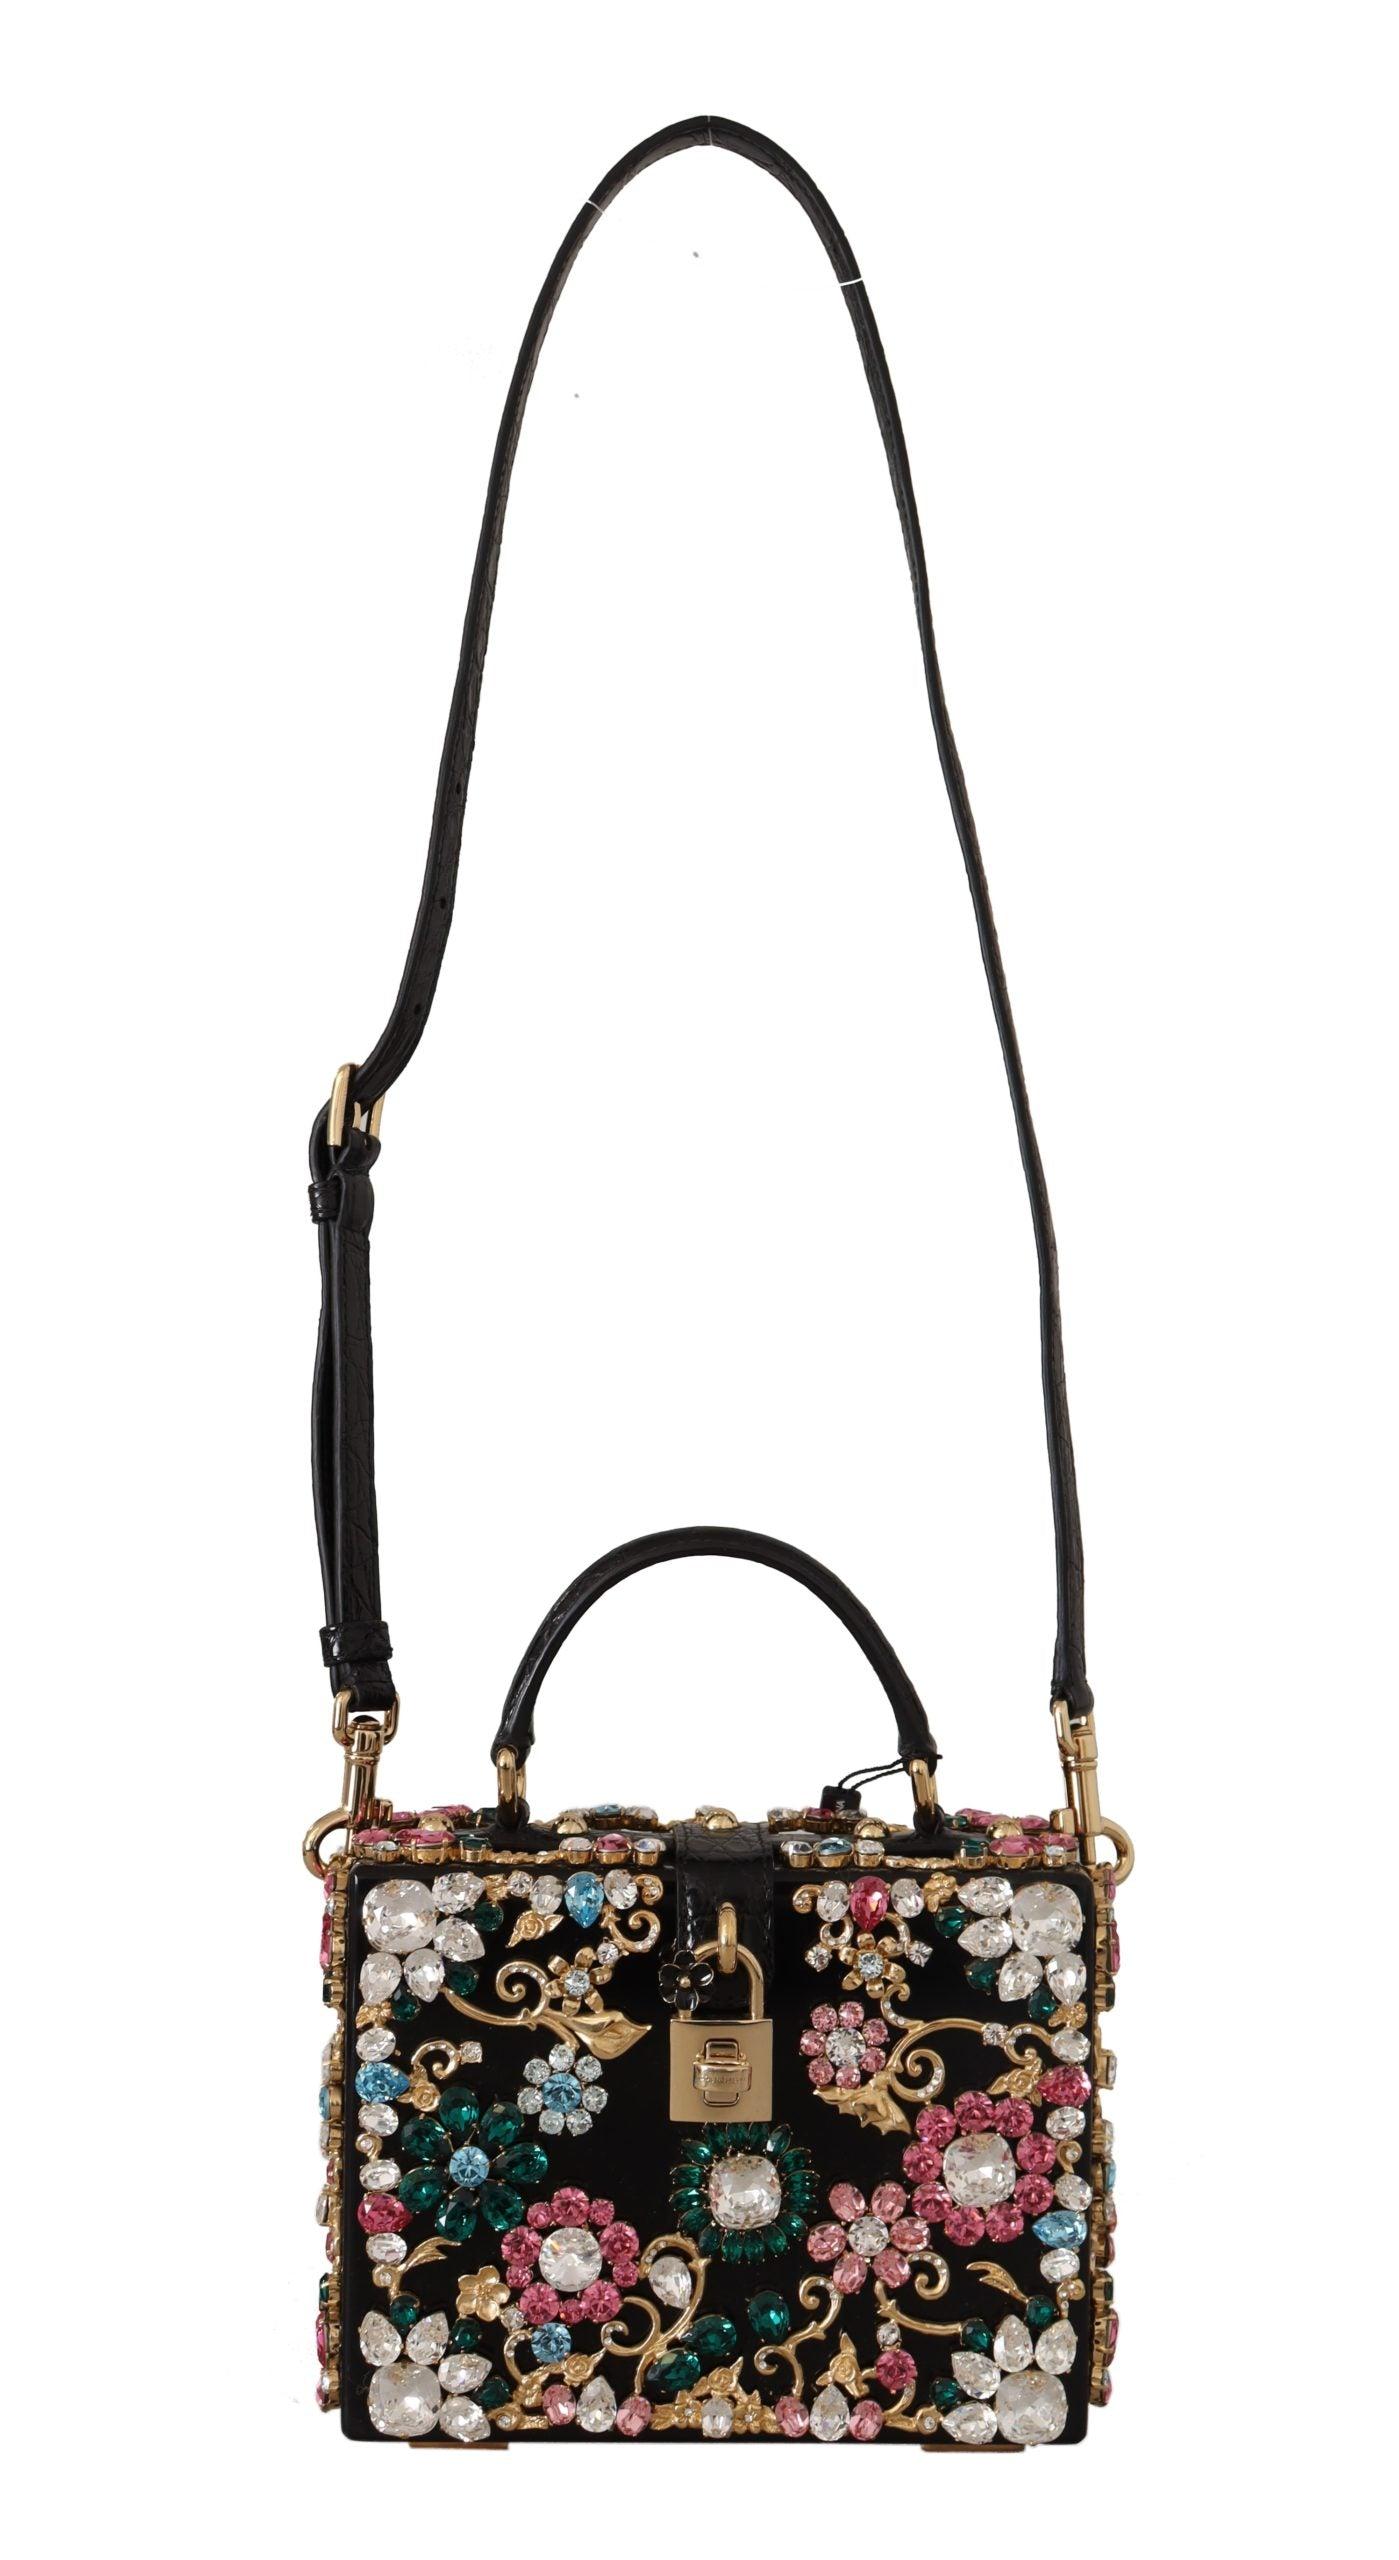 Dolce & Gabbana Black Plexi Crystal Gold Box Borse Leather Bag | Lyst